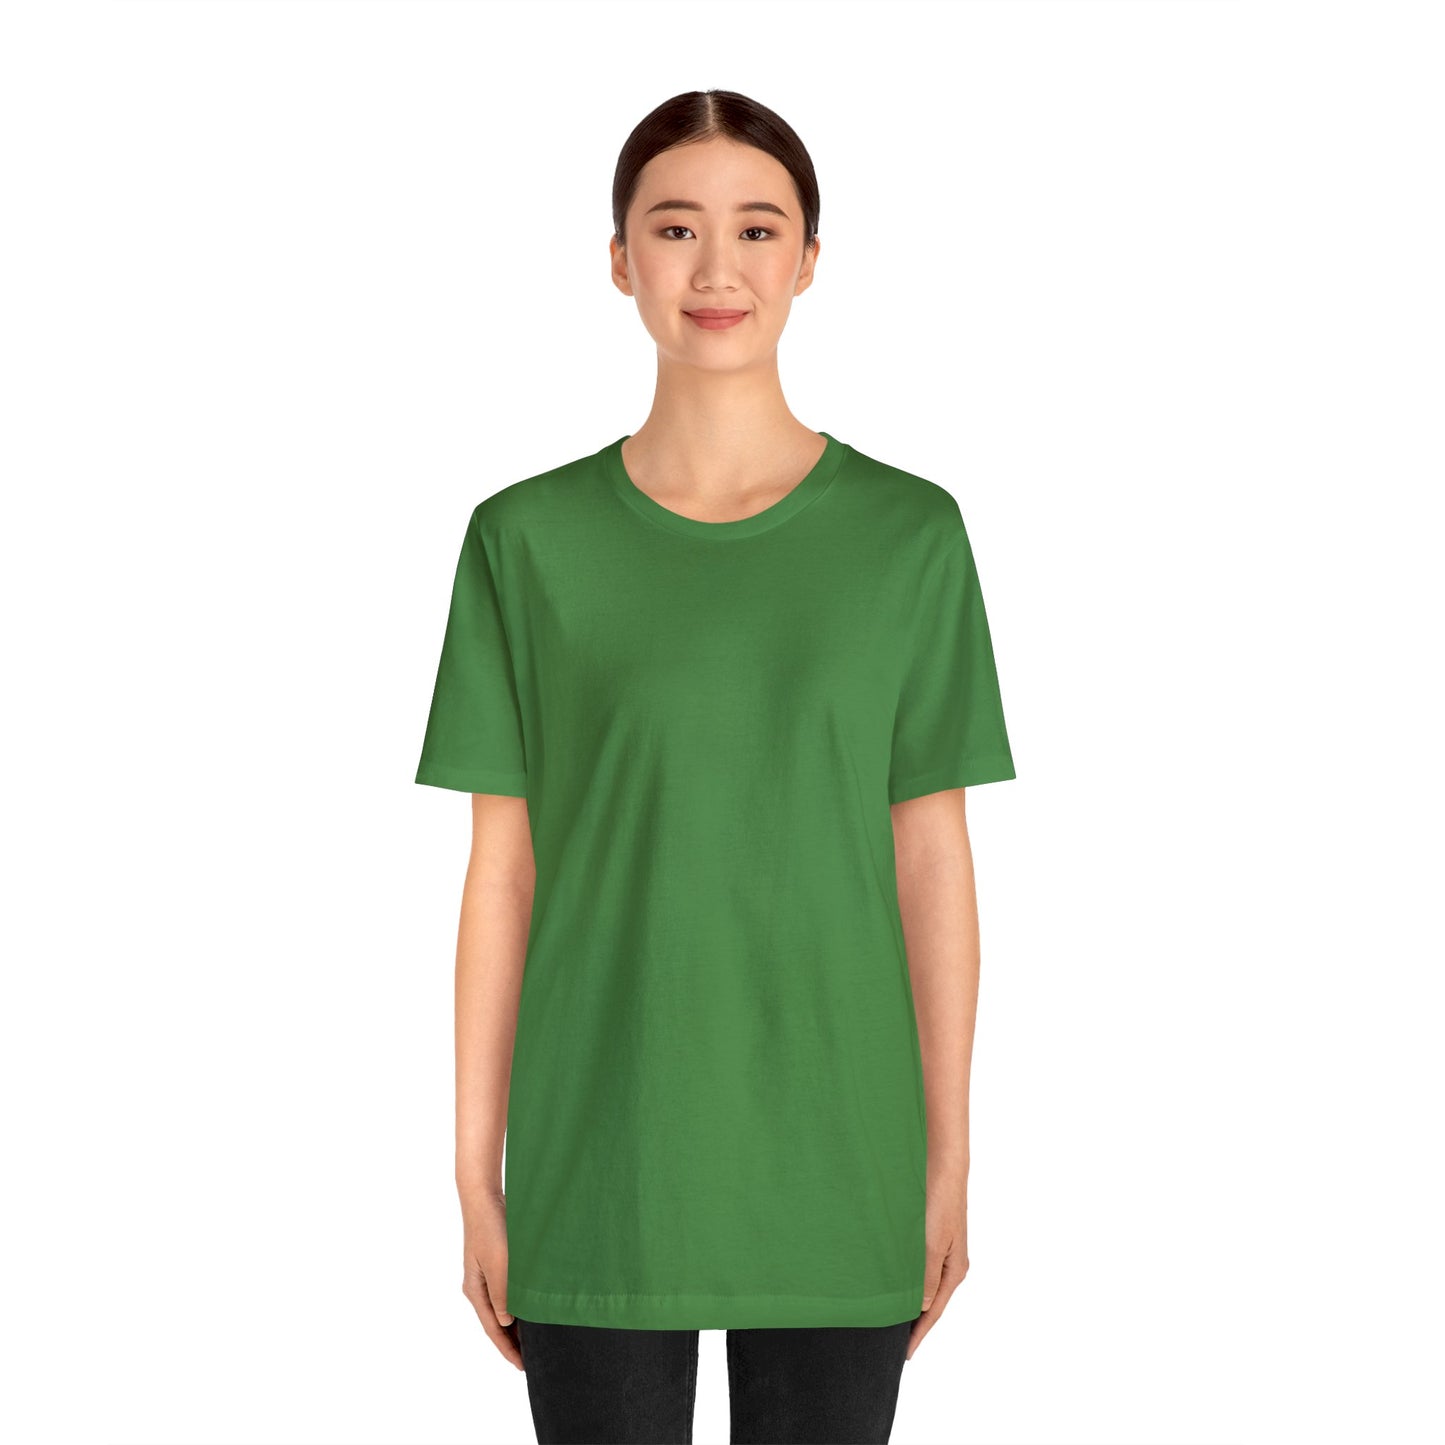 Unisex Jersey Short Sleeve Leaf Green T Shirt